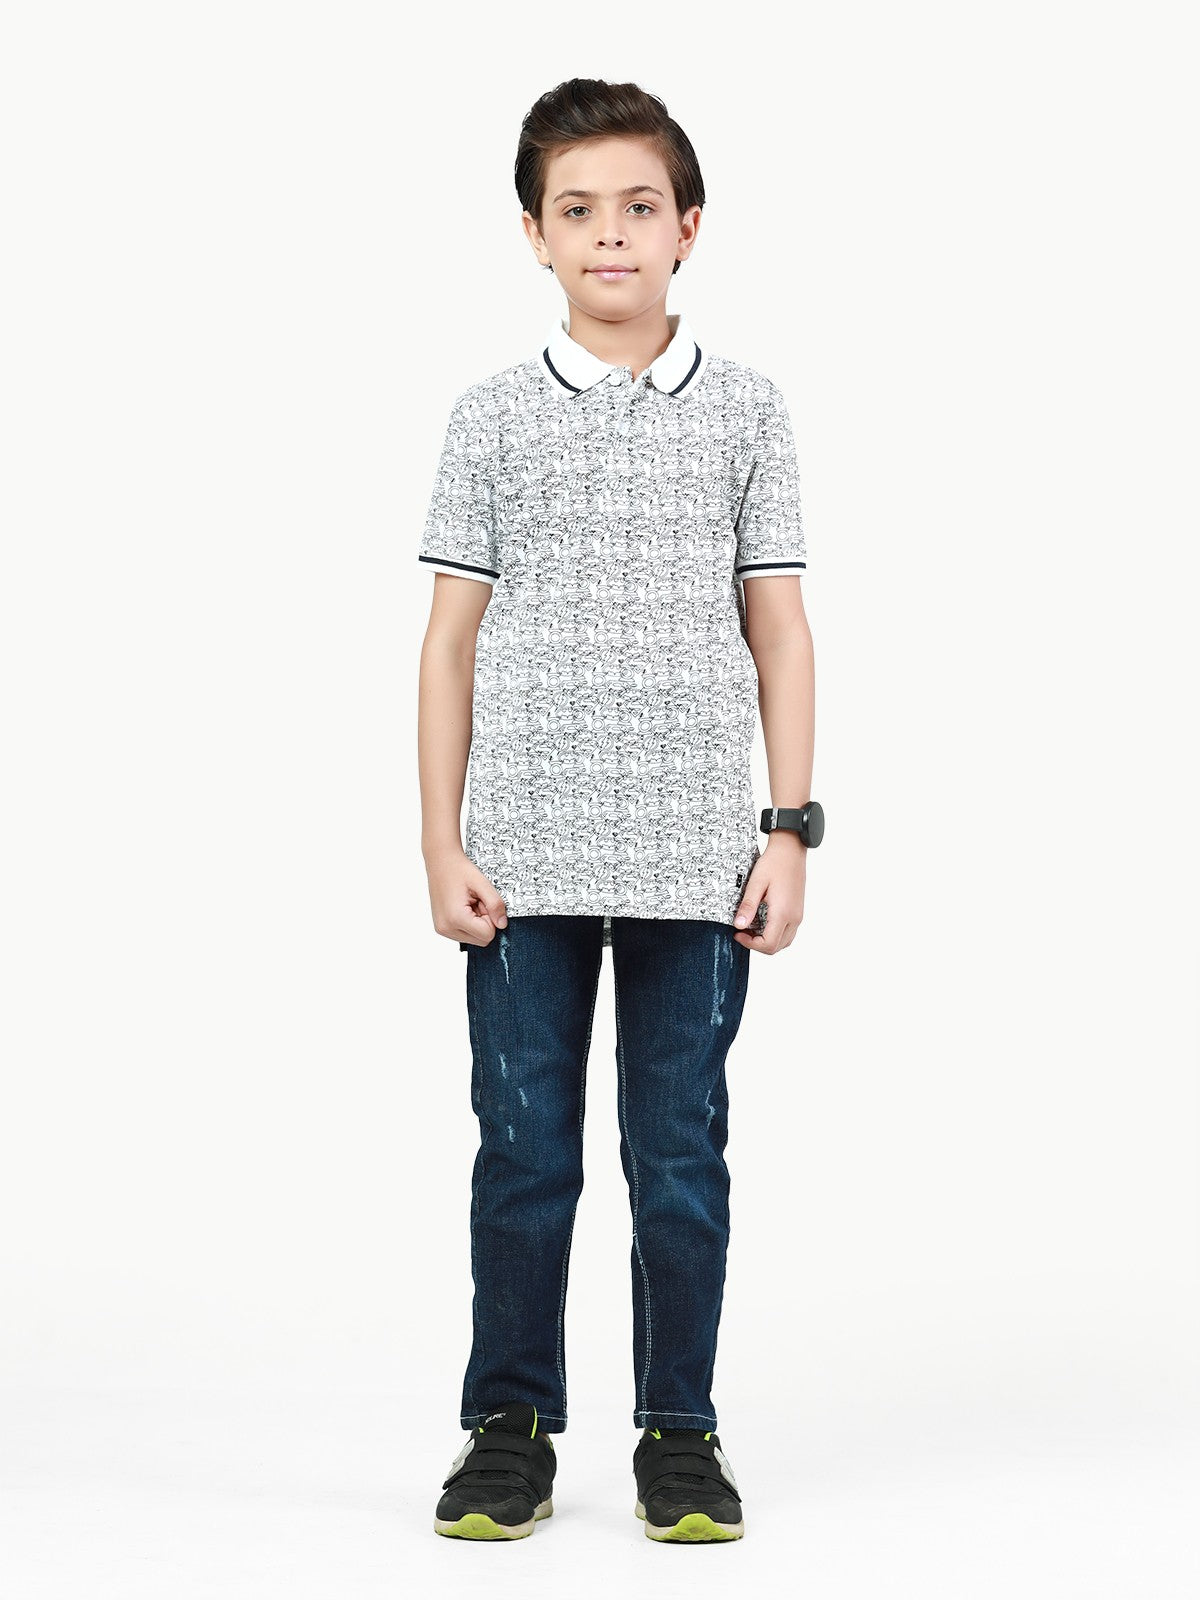 Boy's White Polo Shirt - EBTPS22-002